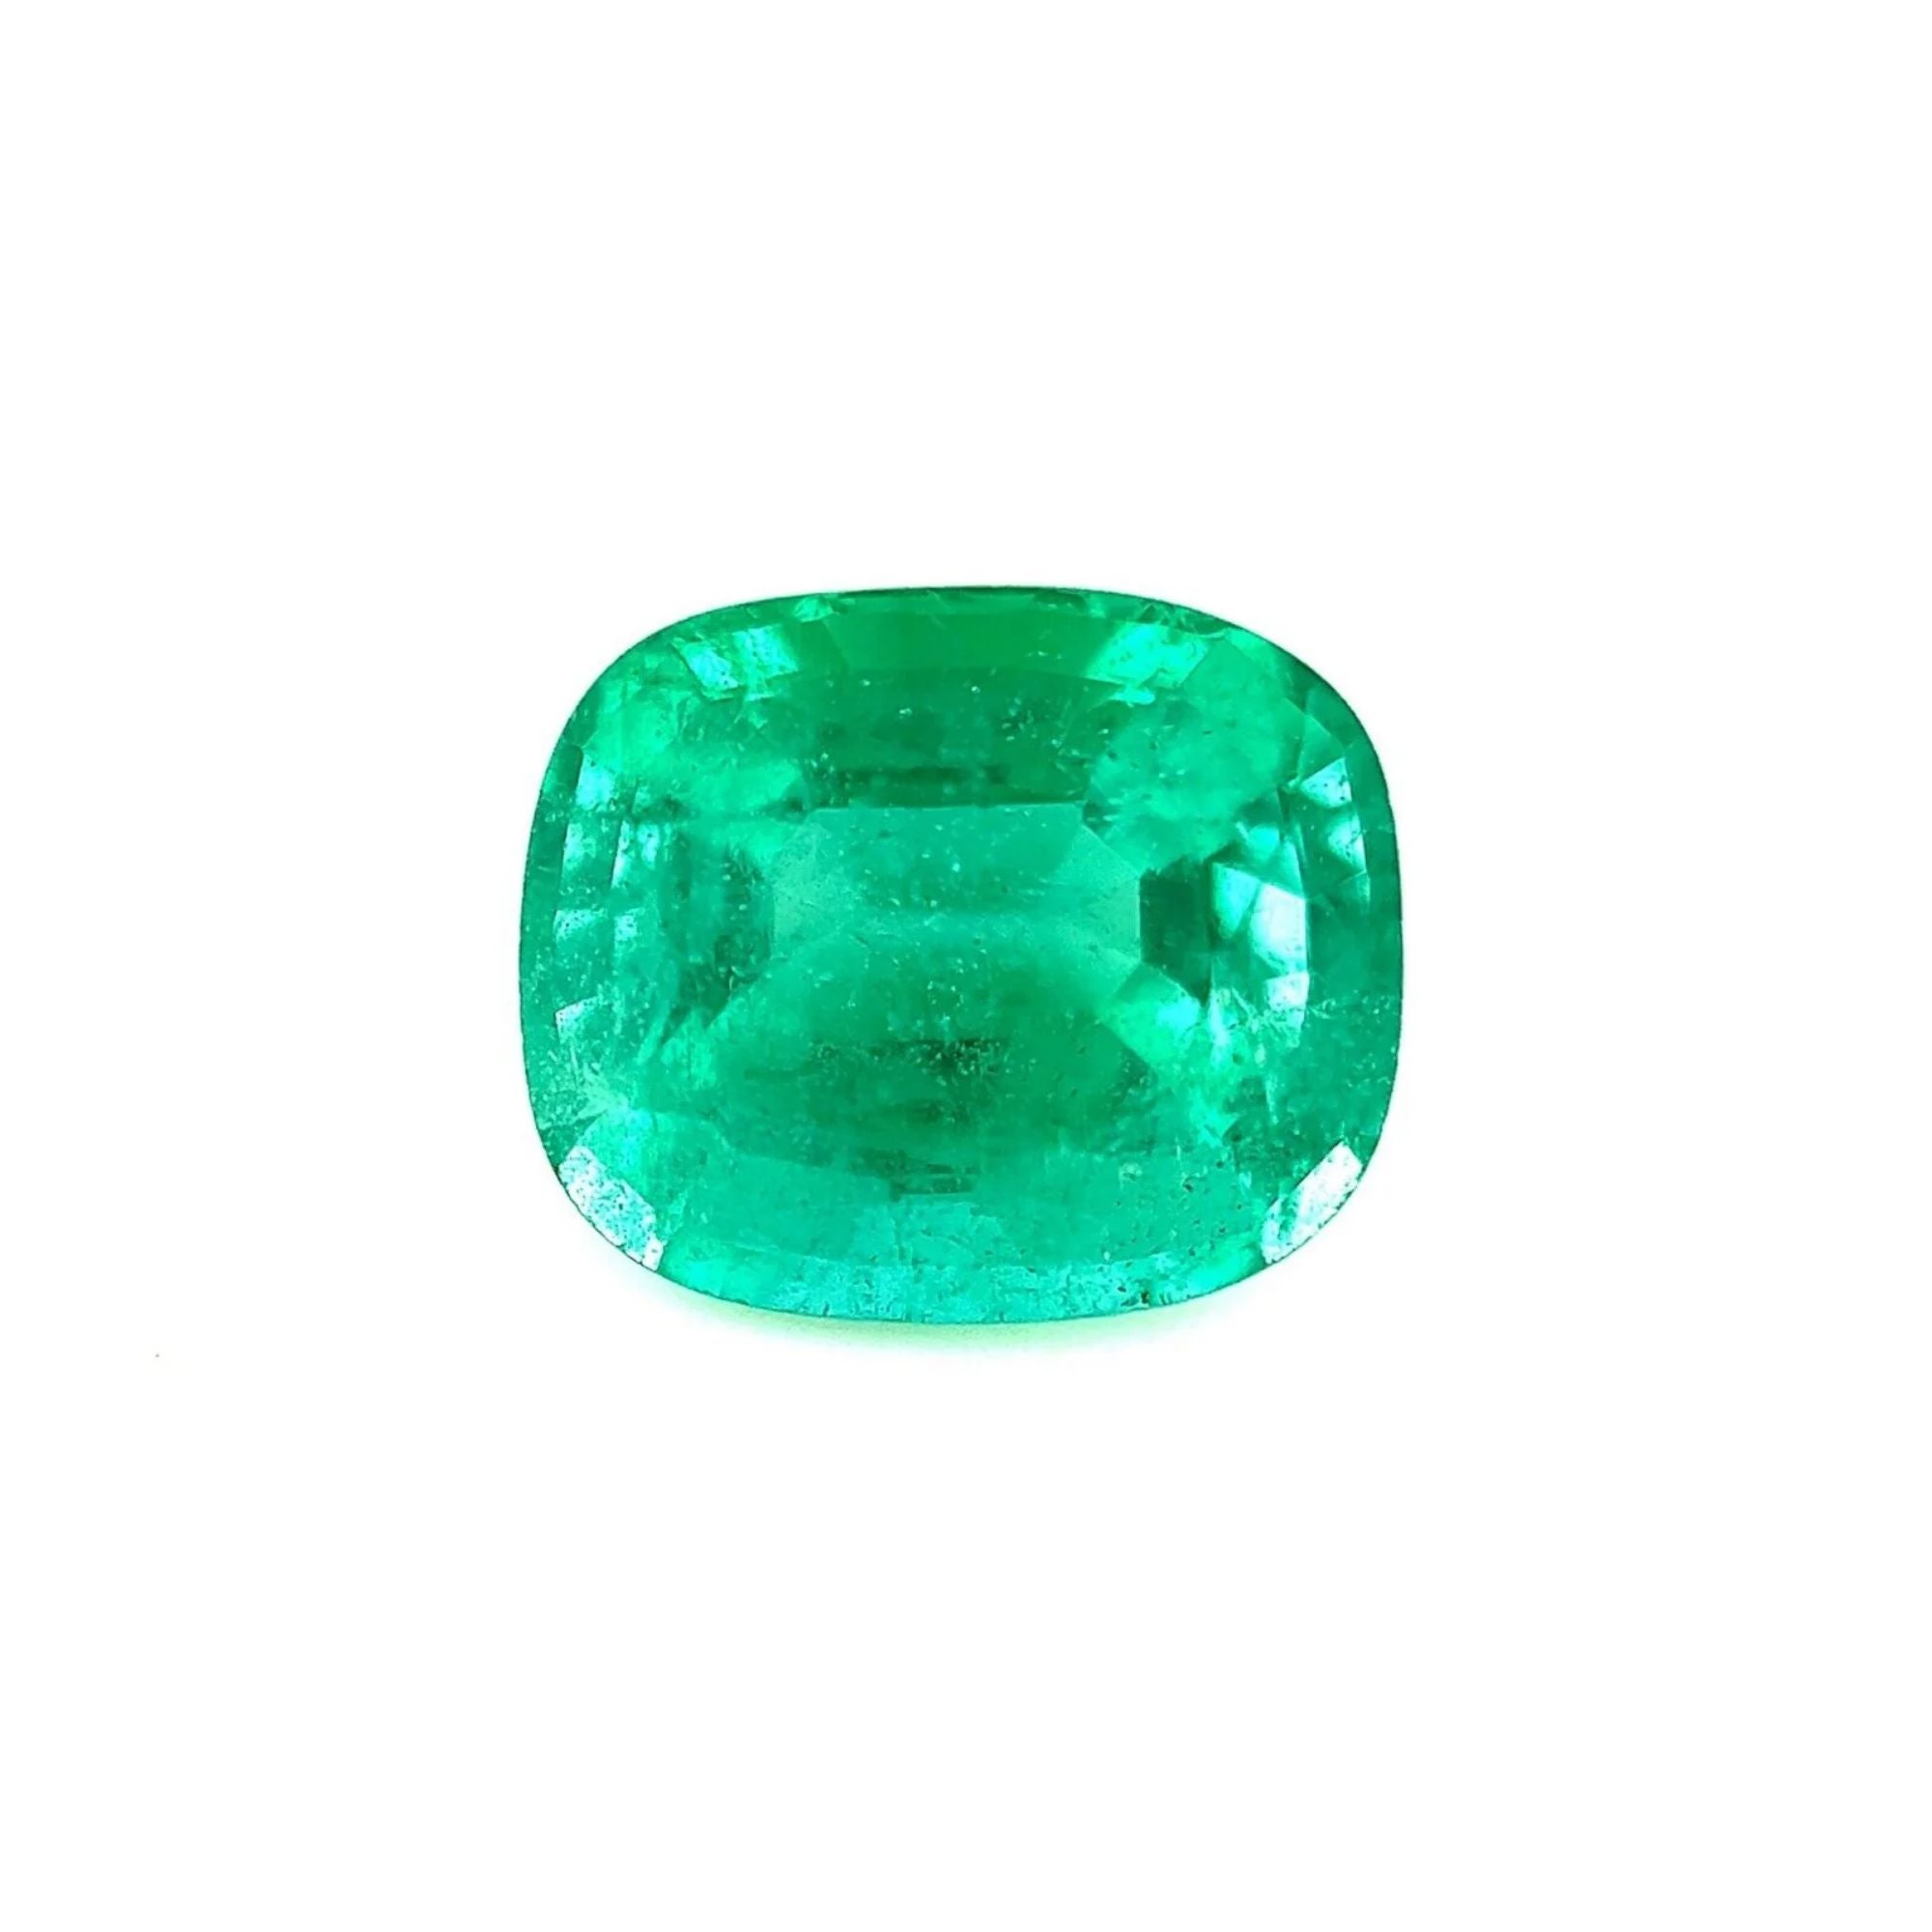 Natural 3.15 Carat Emerald Rare Vivid Green Cushion Cut Loose Gem For Sale